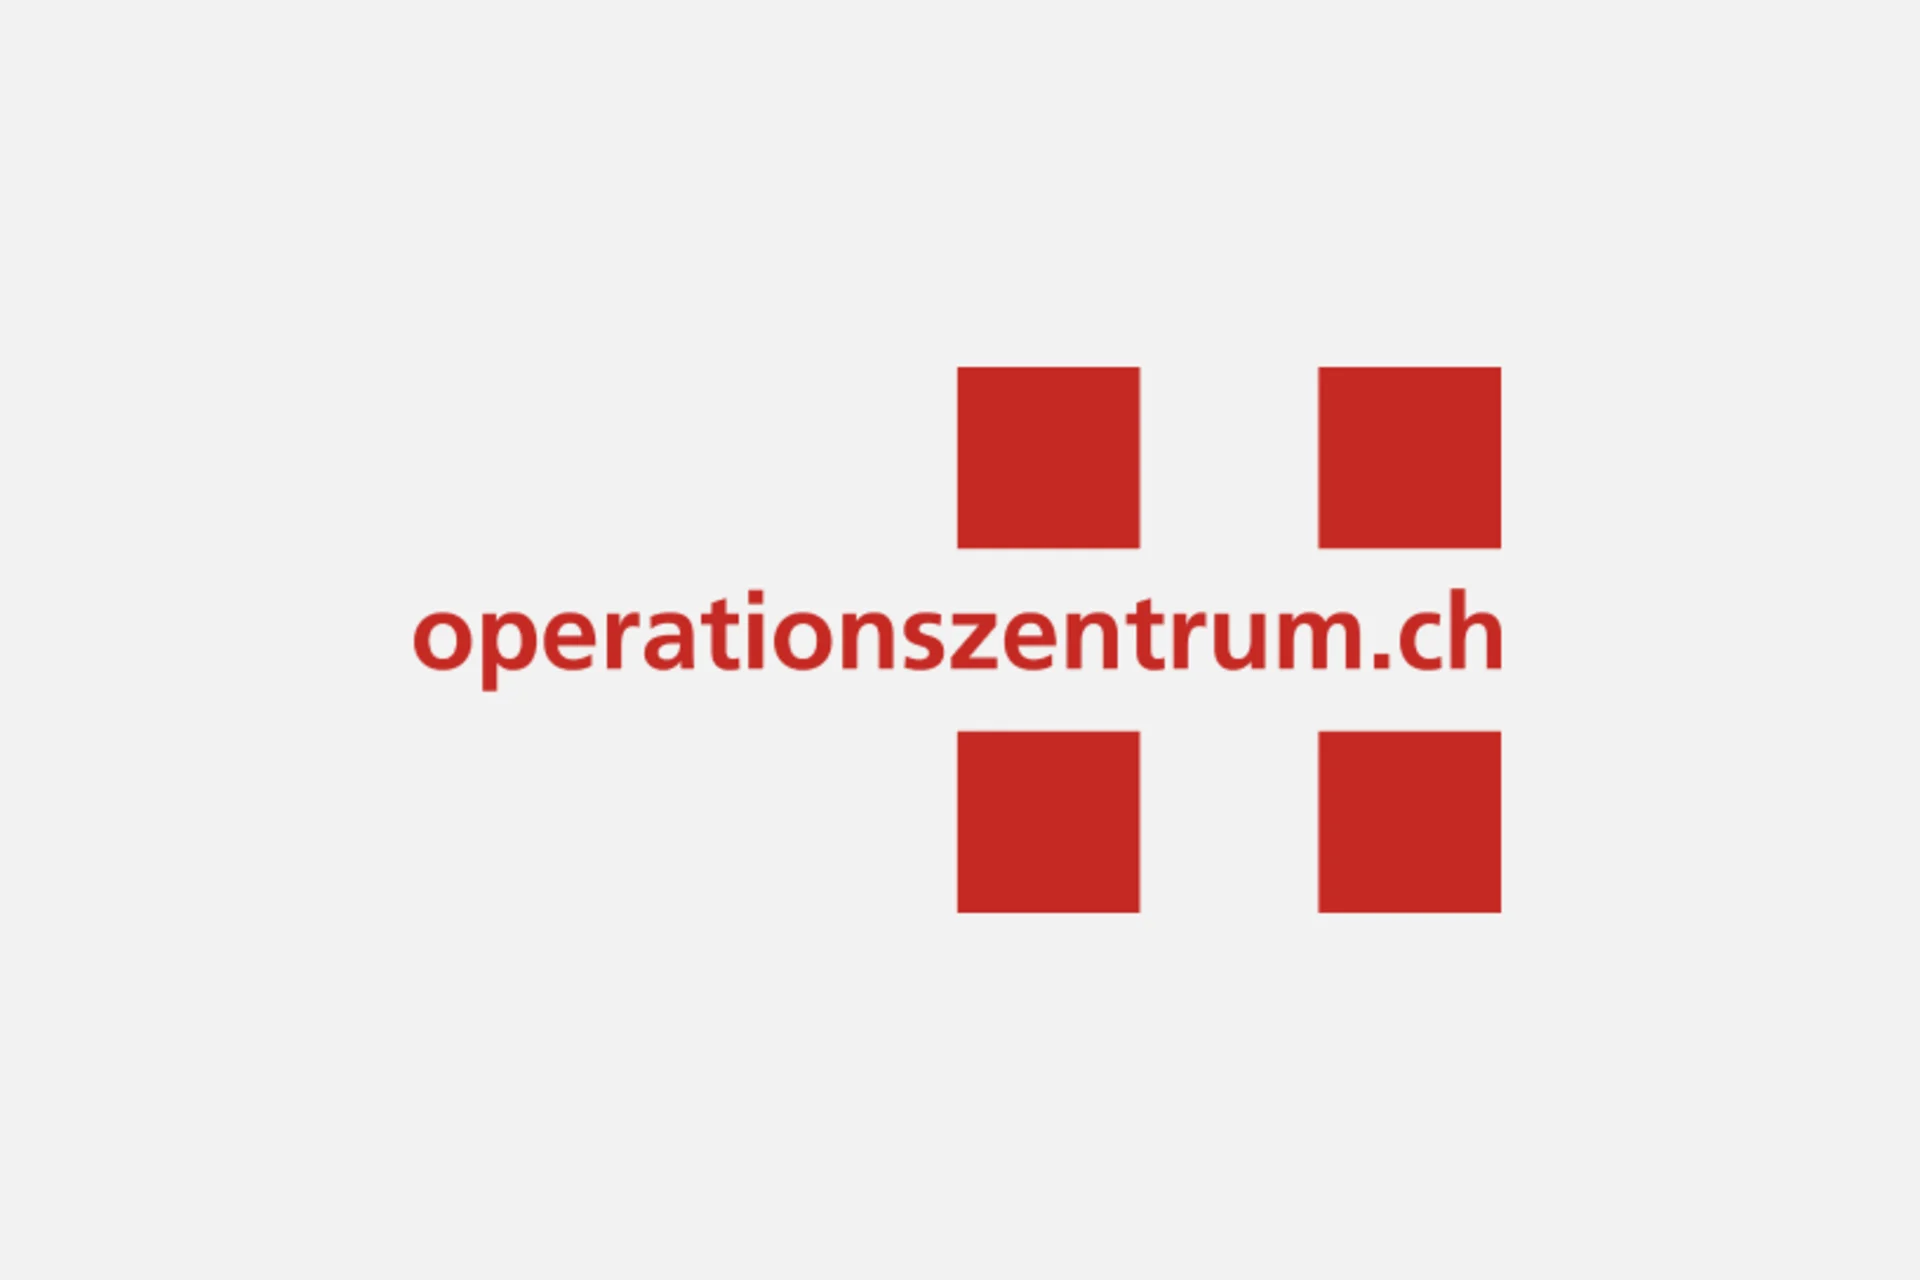 Operationszentrum.ch logo